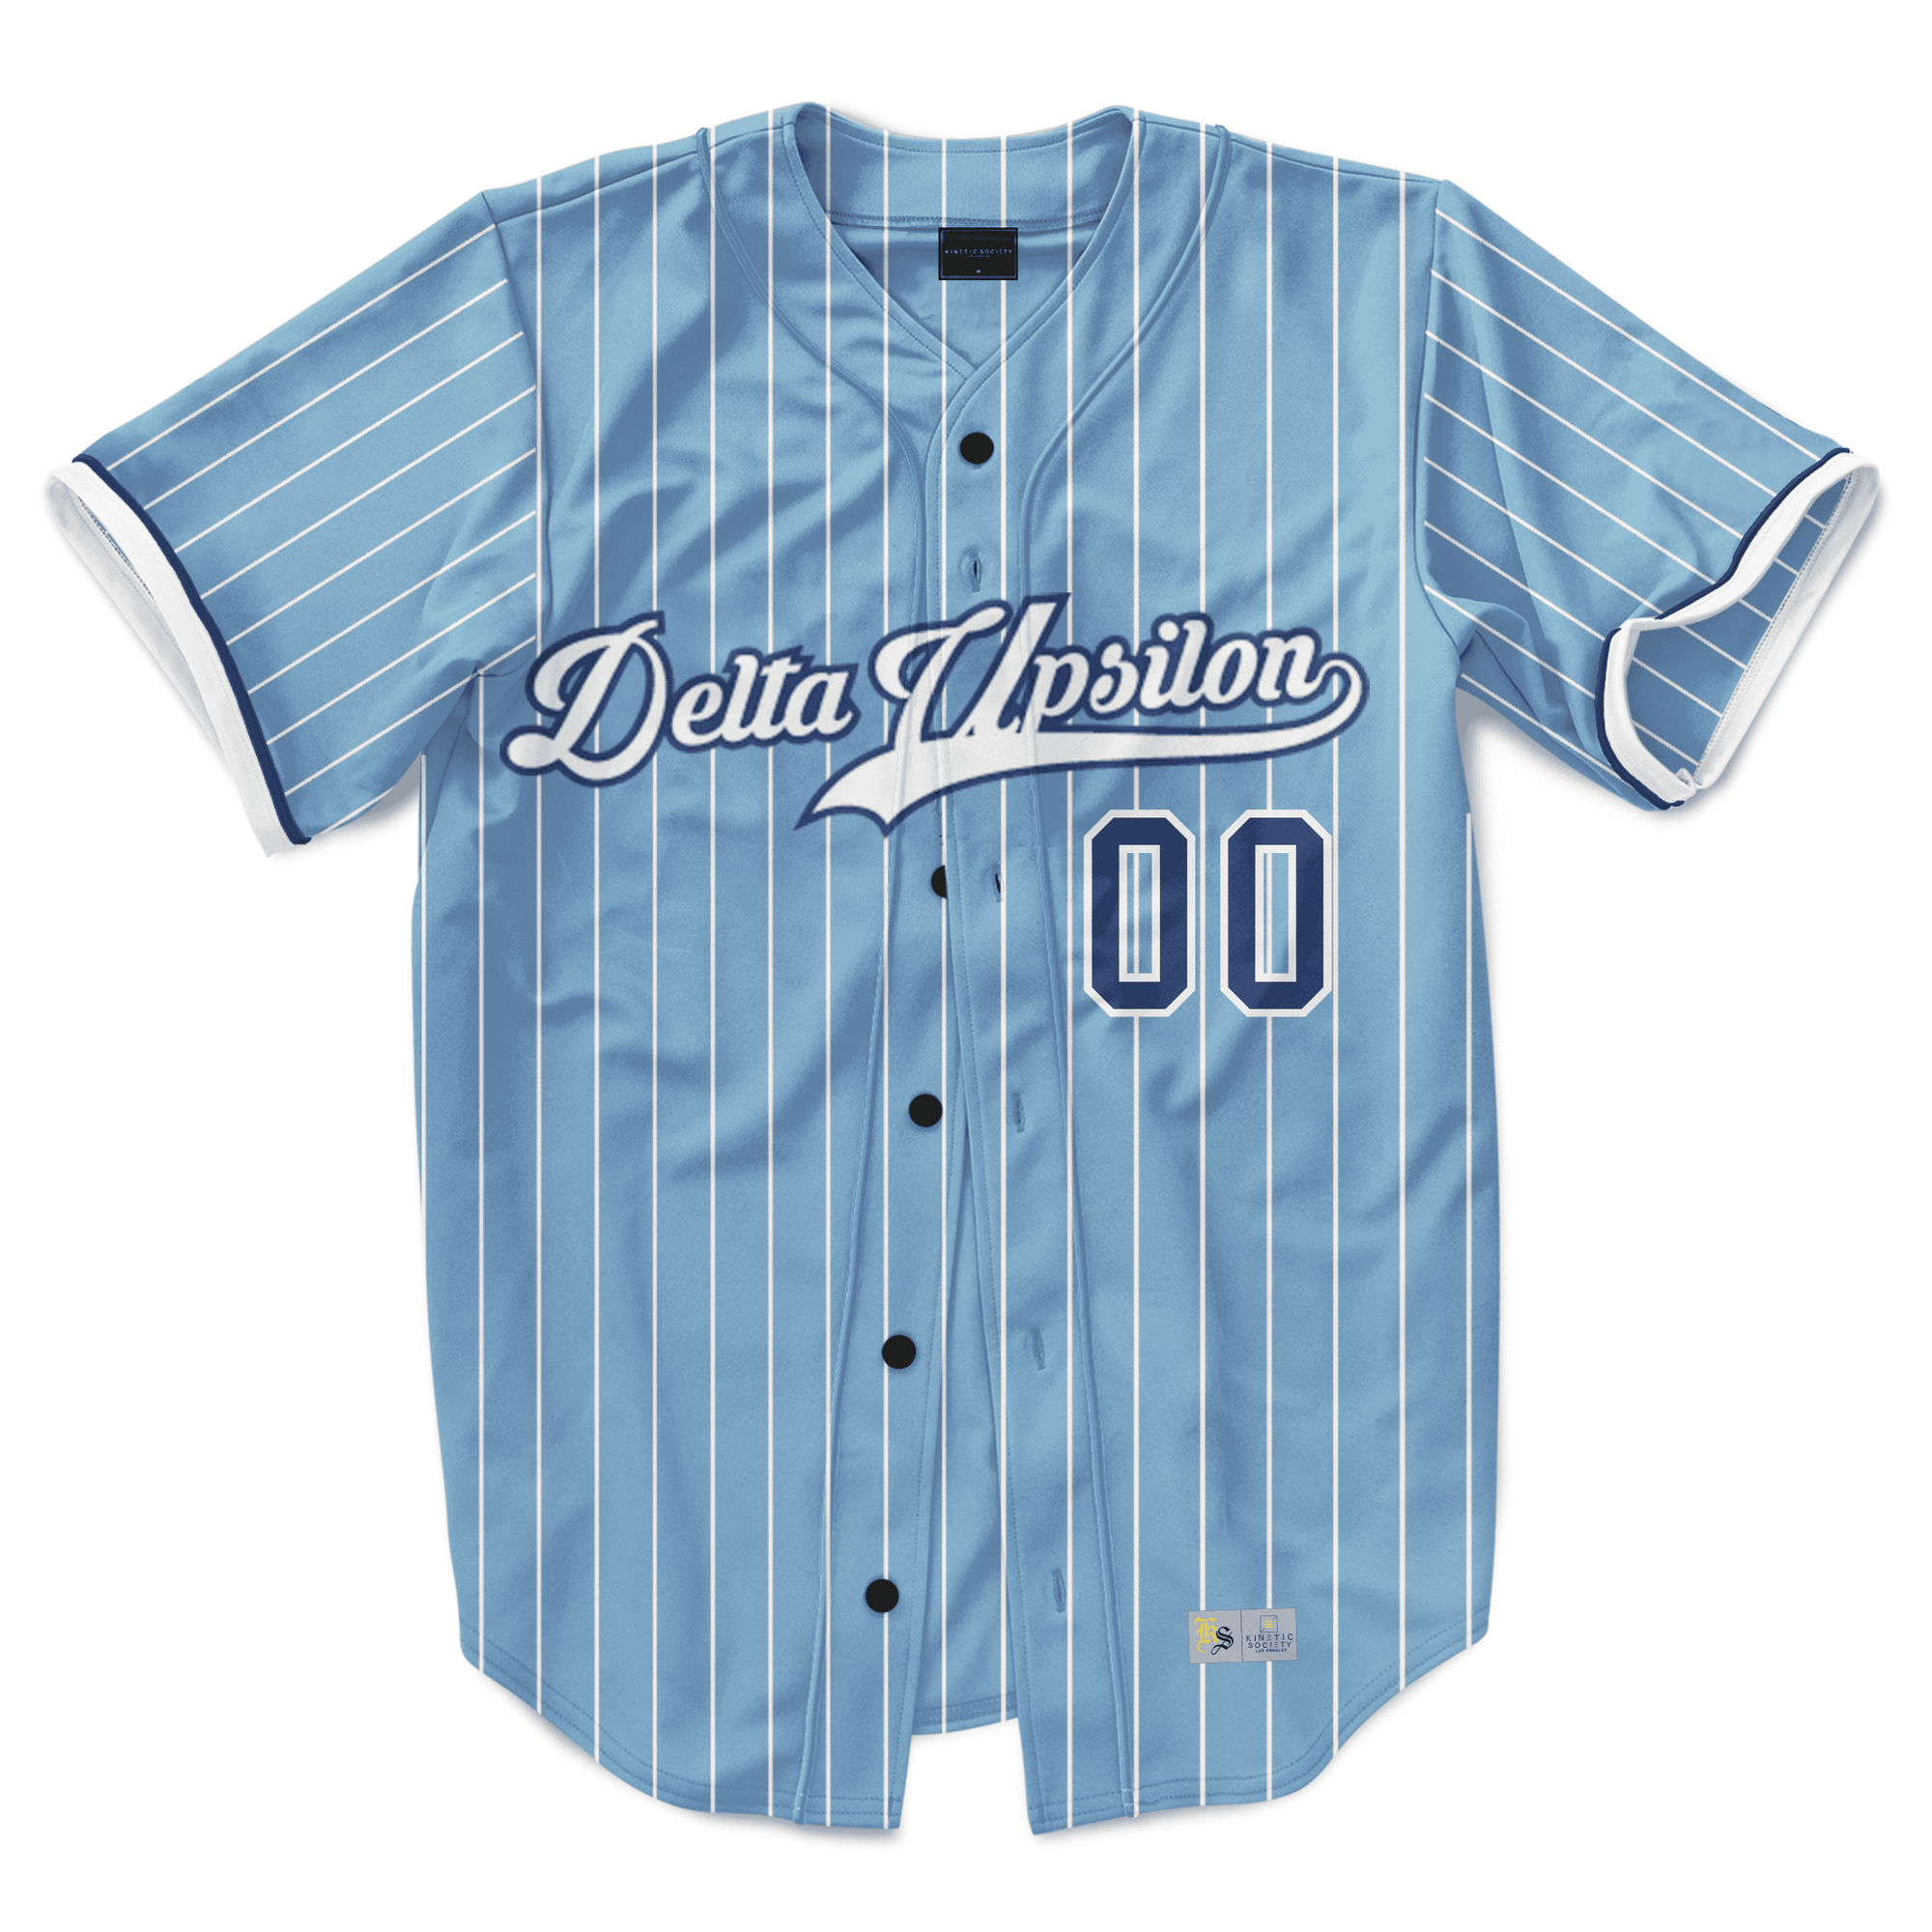 Delta Upsilon - Blue Shade Baseball Jersey